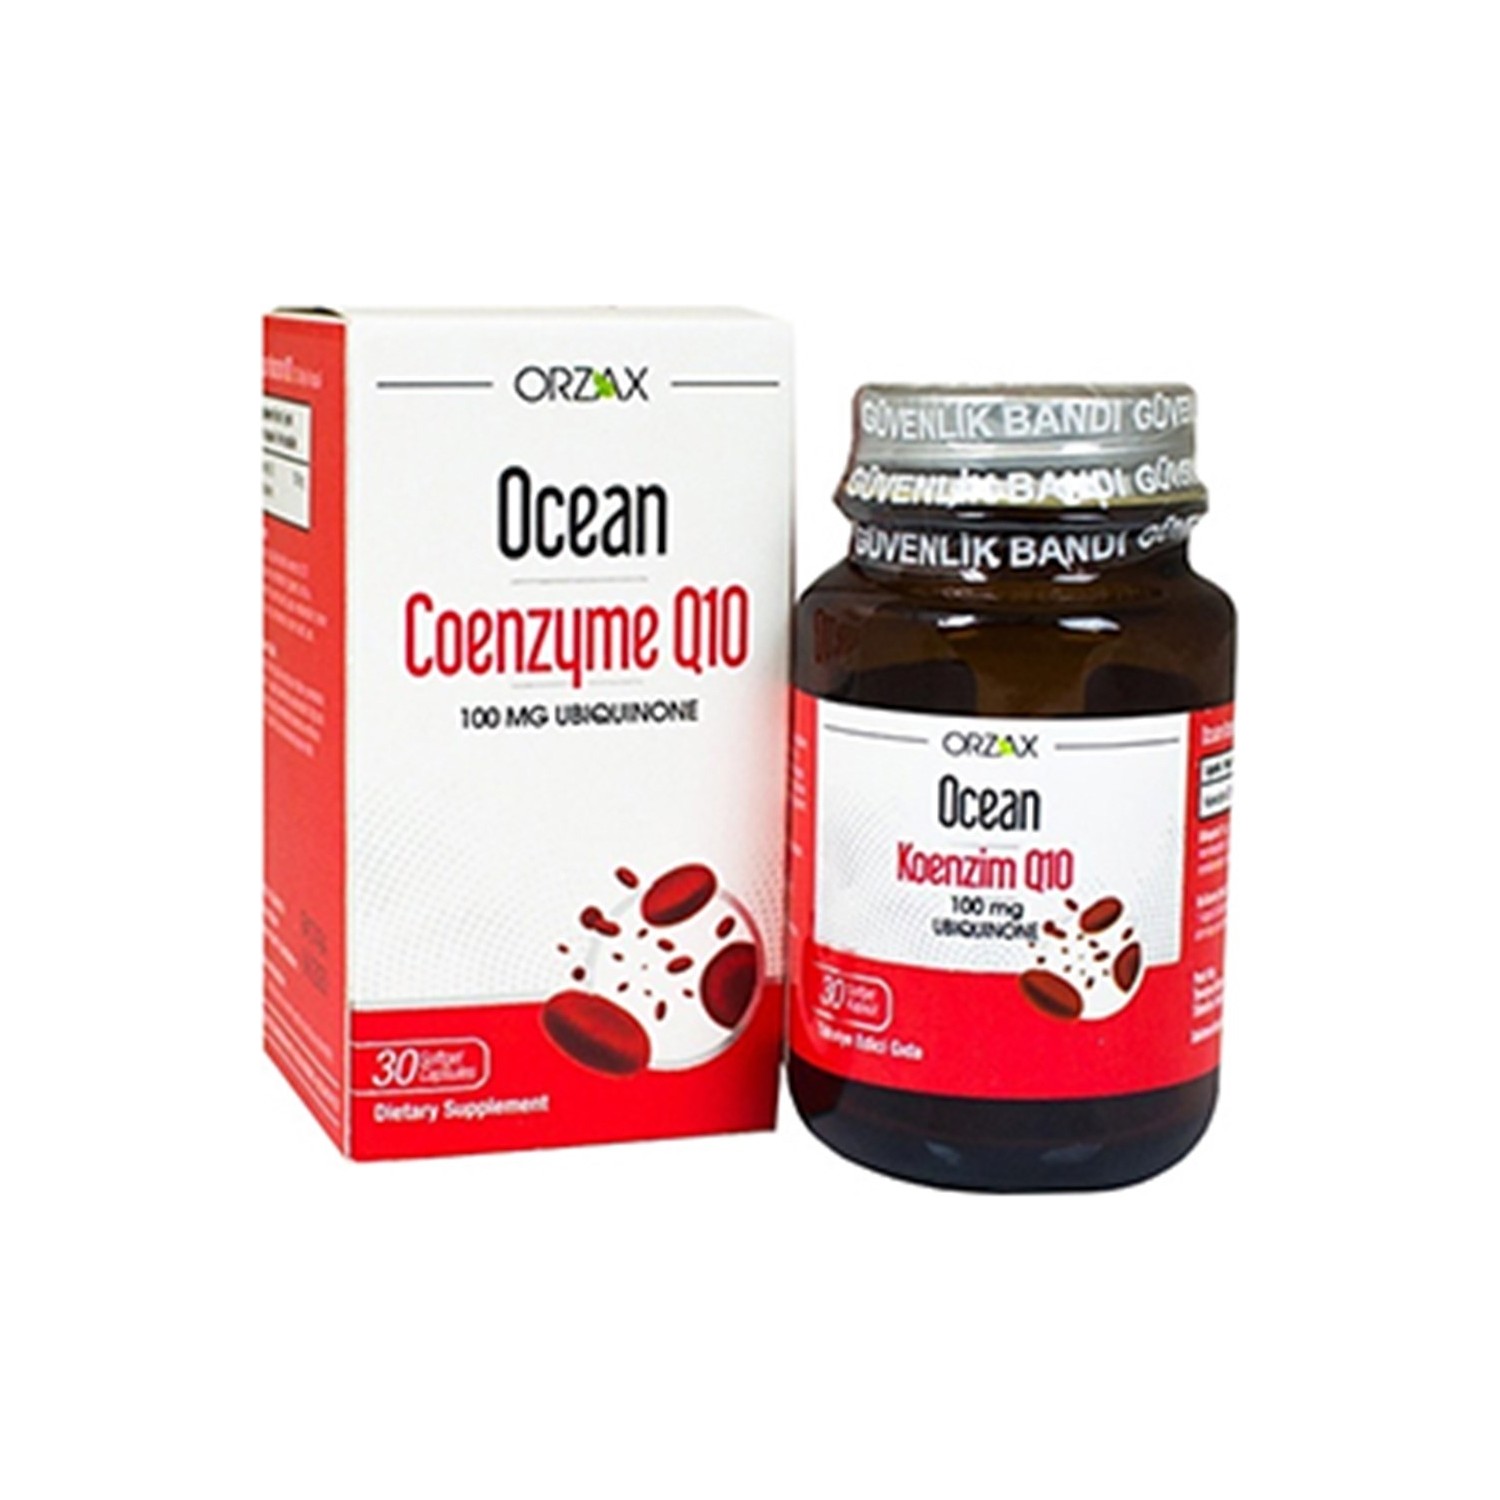 цена Коэнзим Q10 Ocean 100 мг, 30 капсул